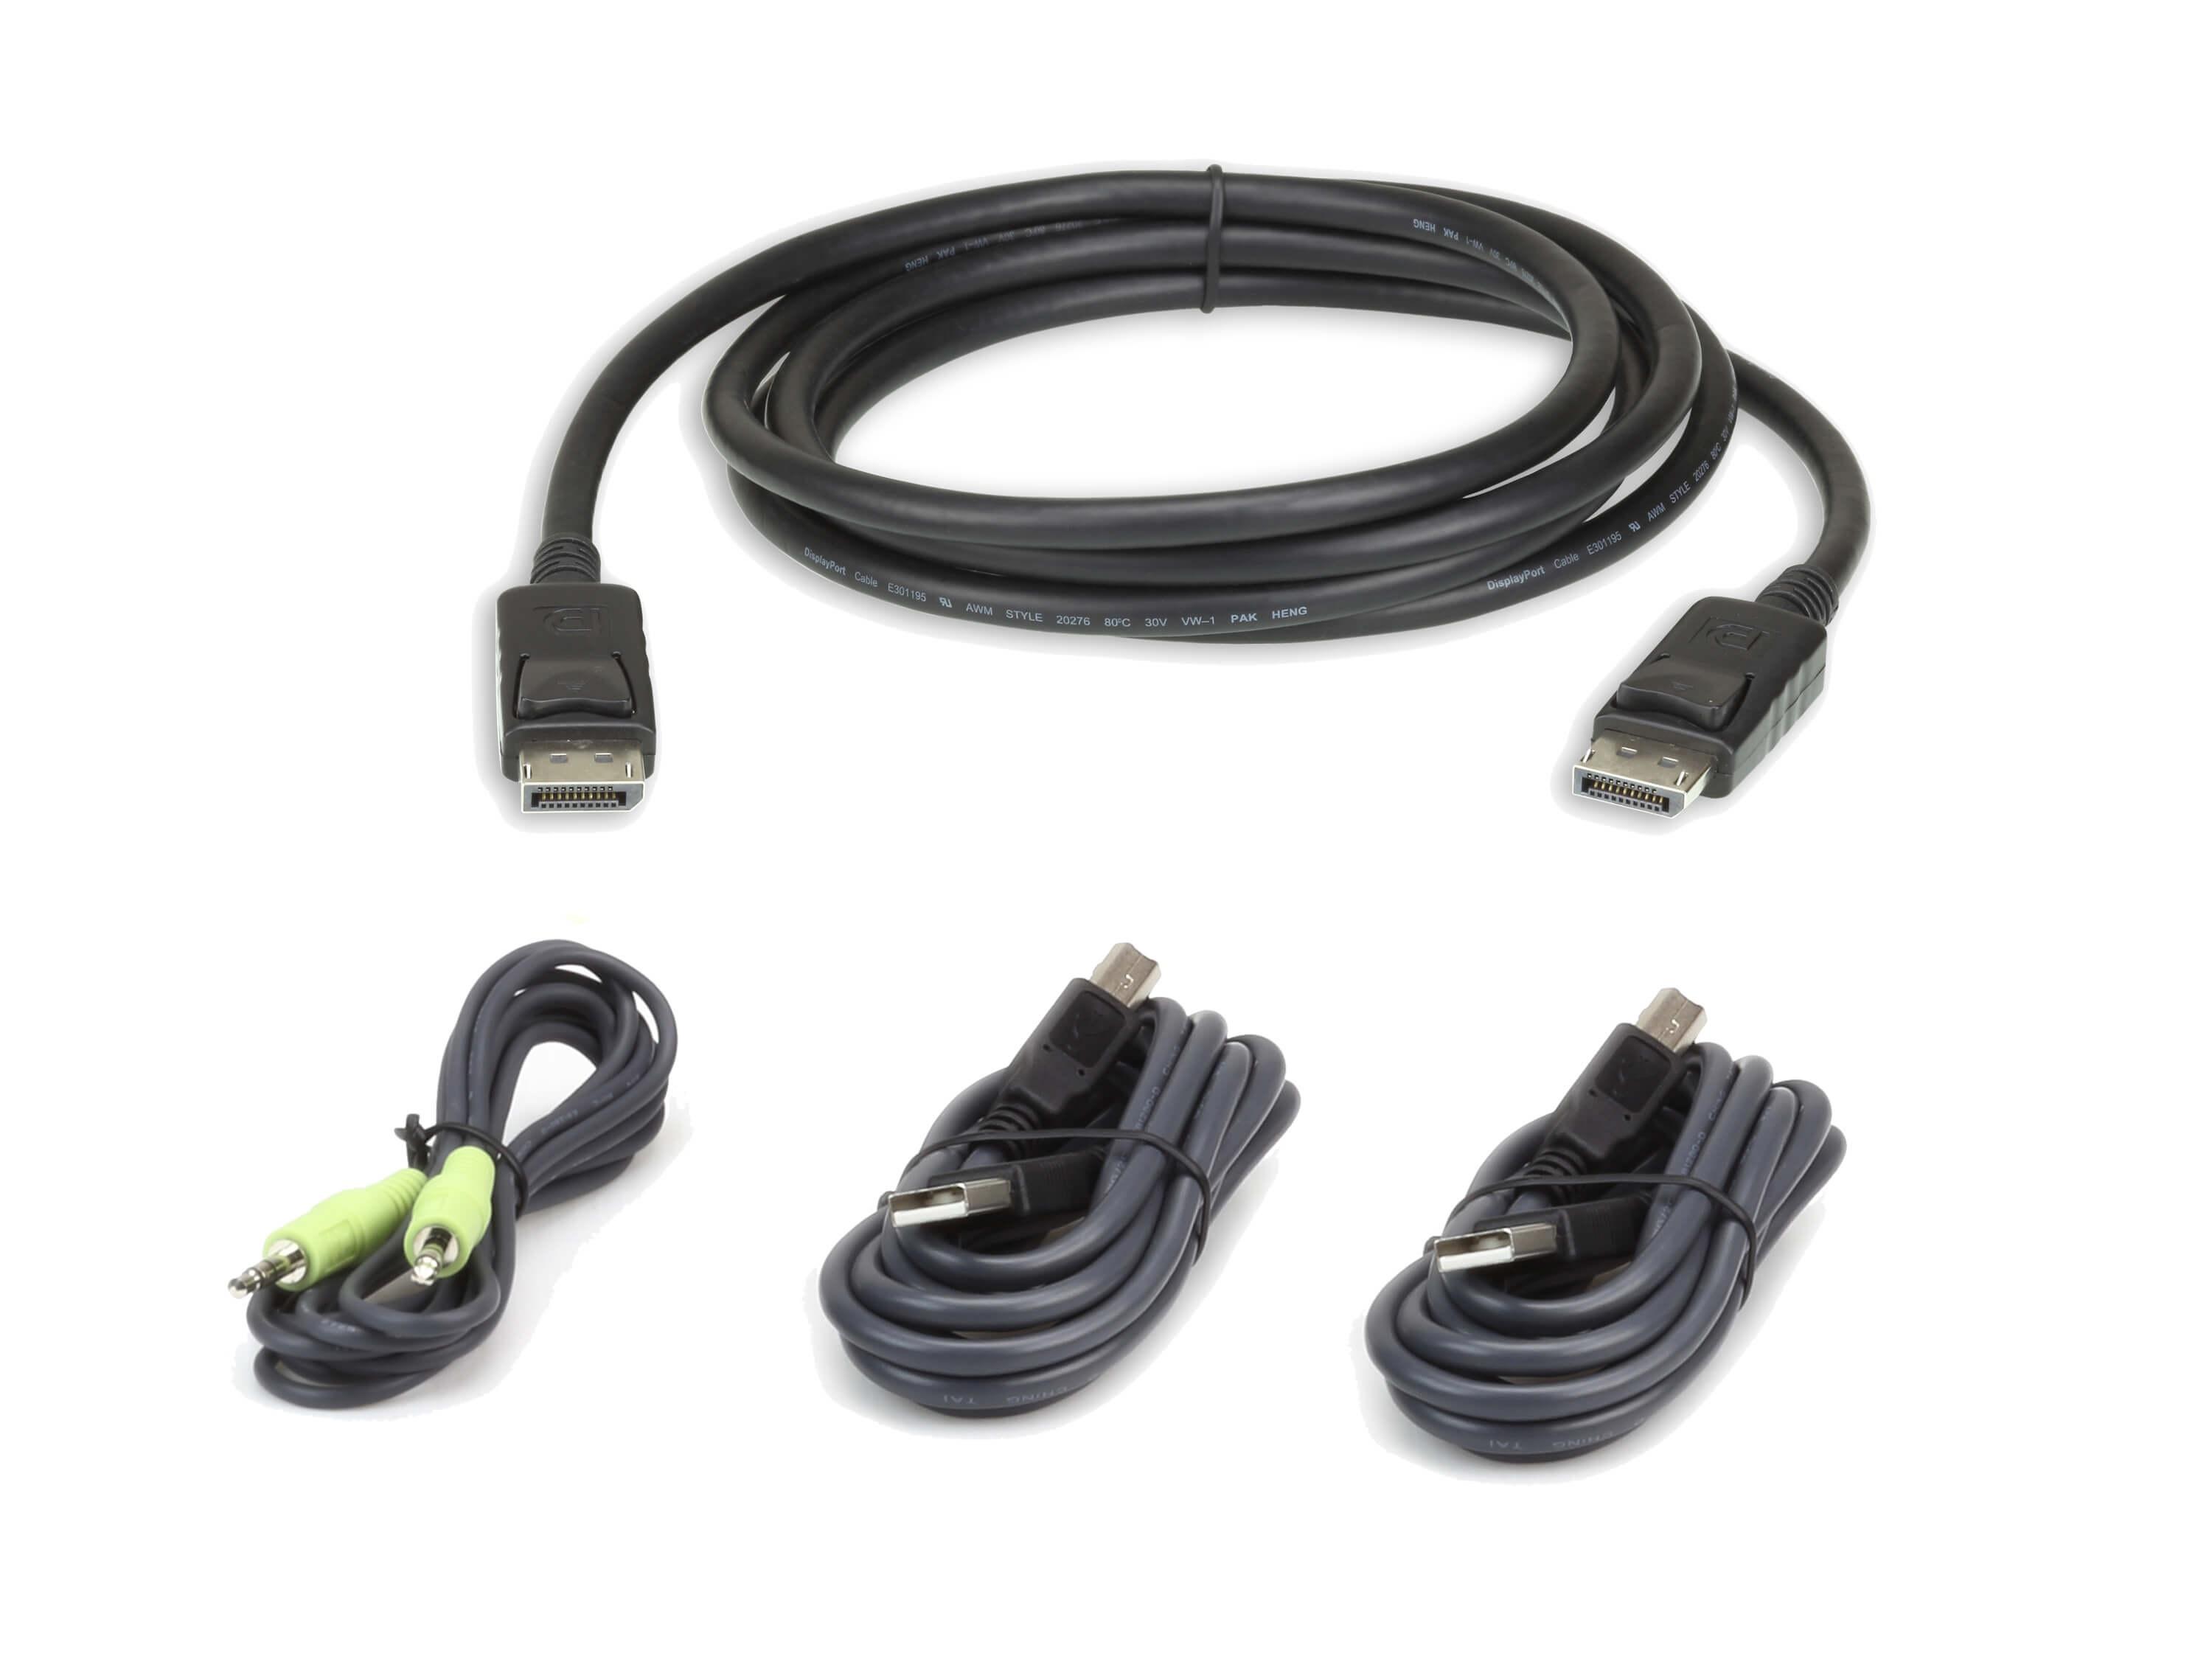 2L-7D03UDPX4 3m USB DisplayPort Secure KVM Cable Kit by Aten